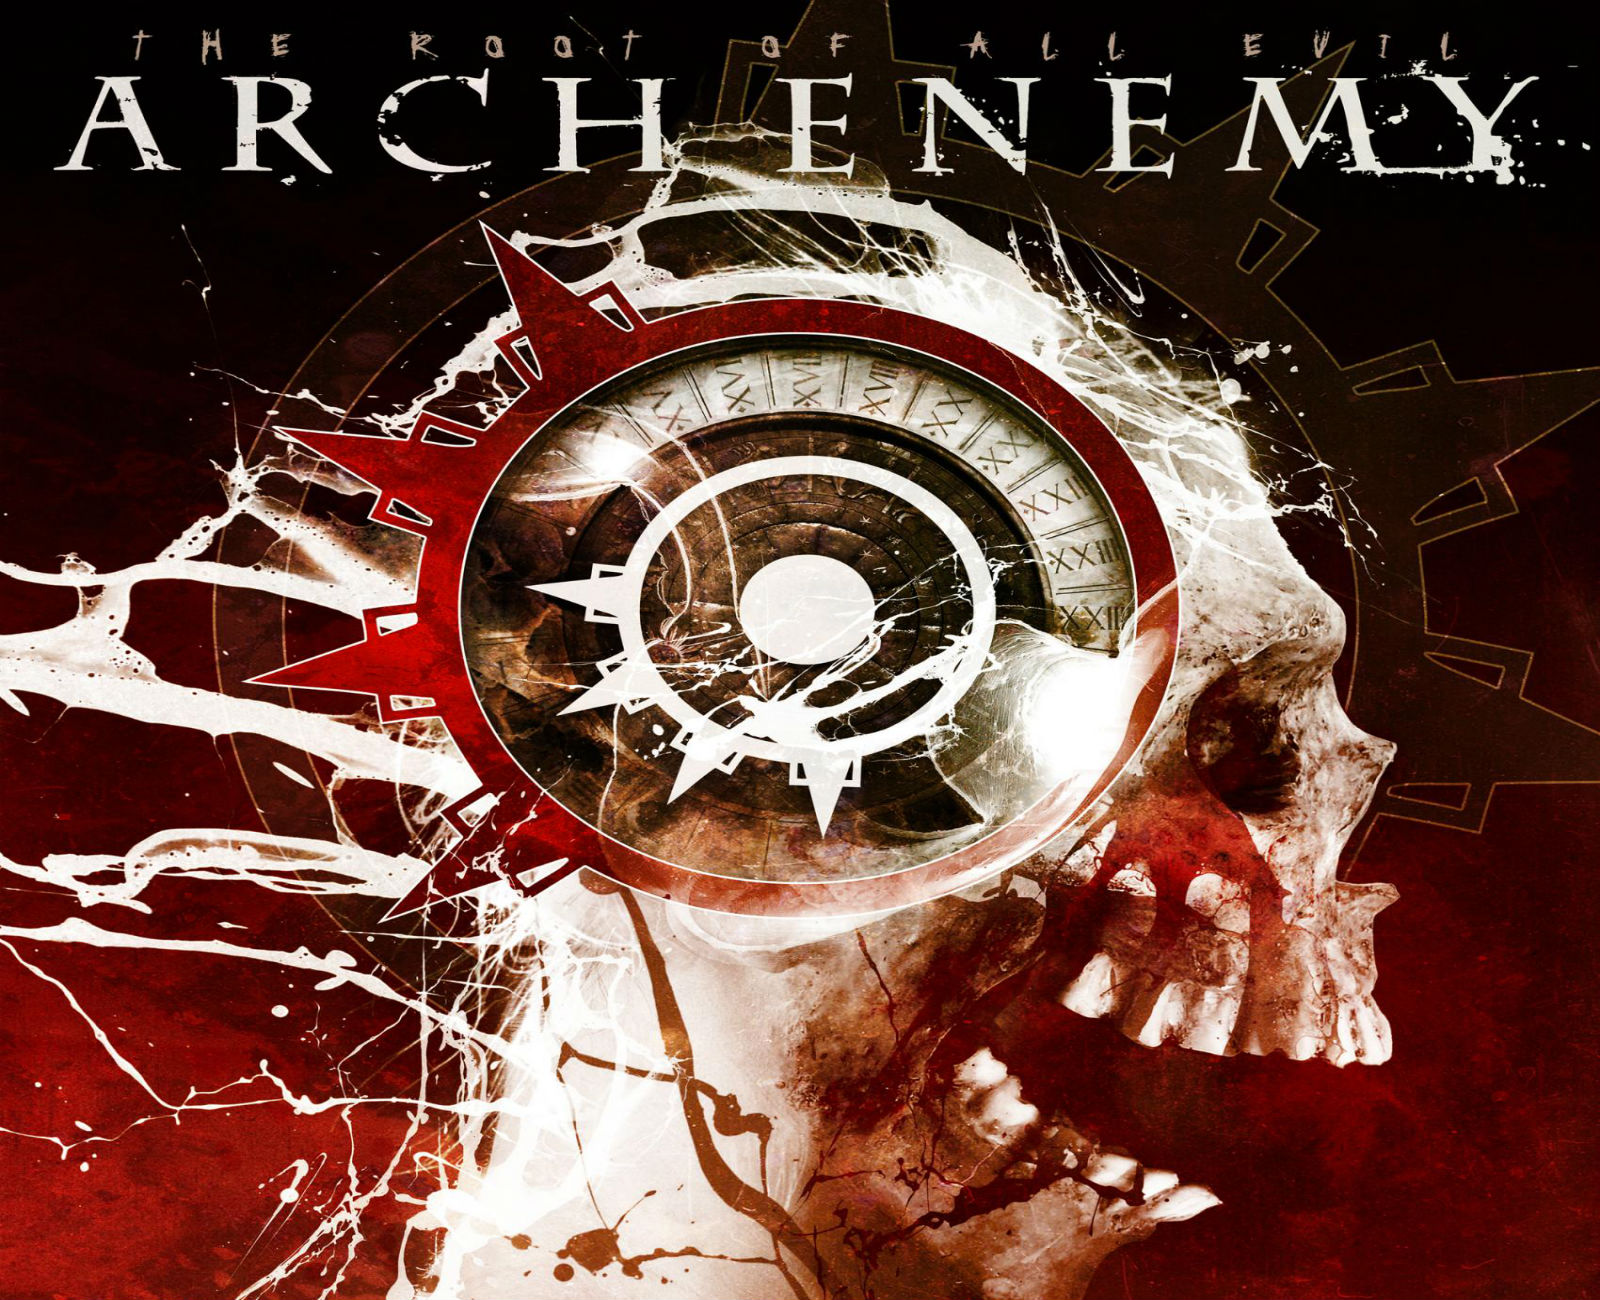 arch, Enemy, Technical, Power, Death, Metal, Heavy, Album, Art, Cover